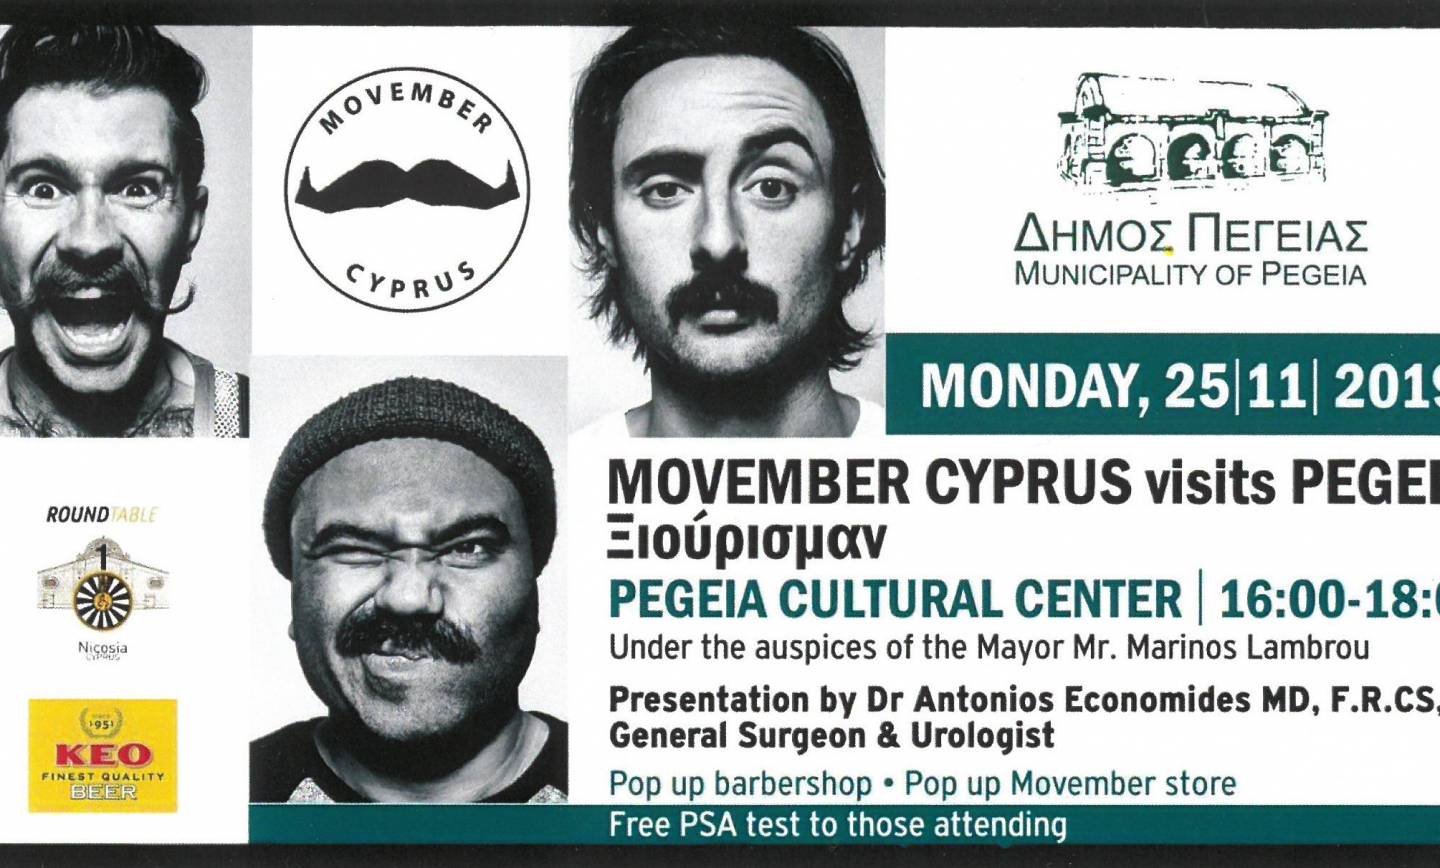 MOVEMBER CYPRUS, ΔΕΥΤΕΡΑ 25/11/2019 ΣΤΗΝ ΠΕΓΕΙΑ